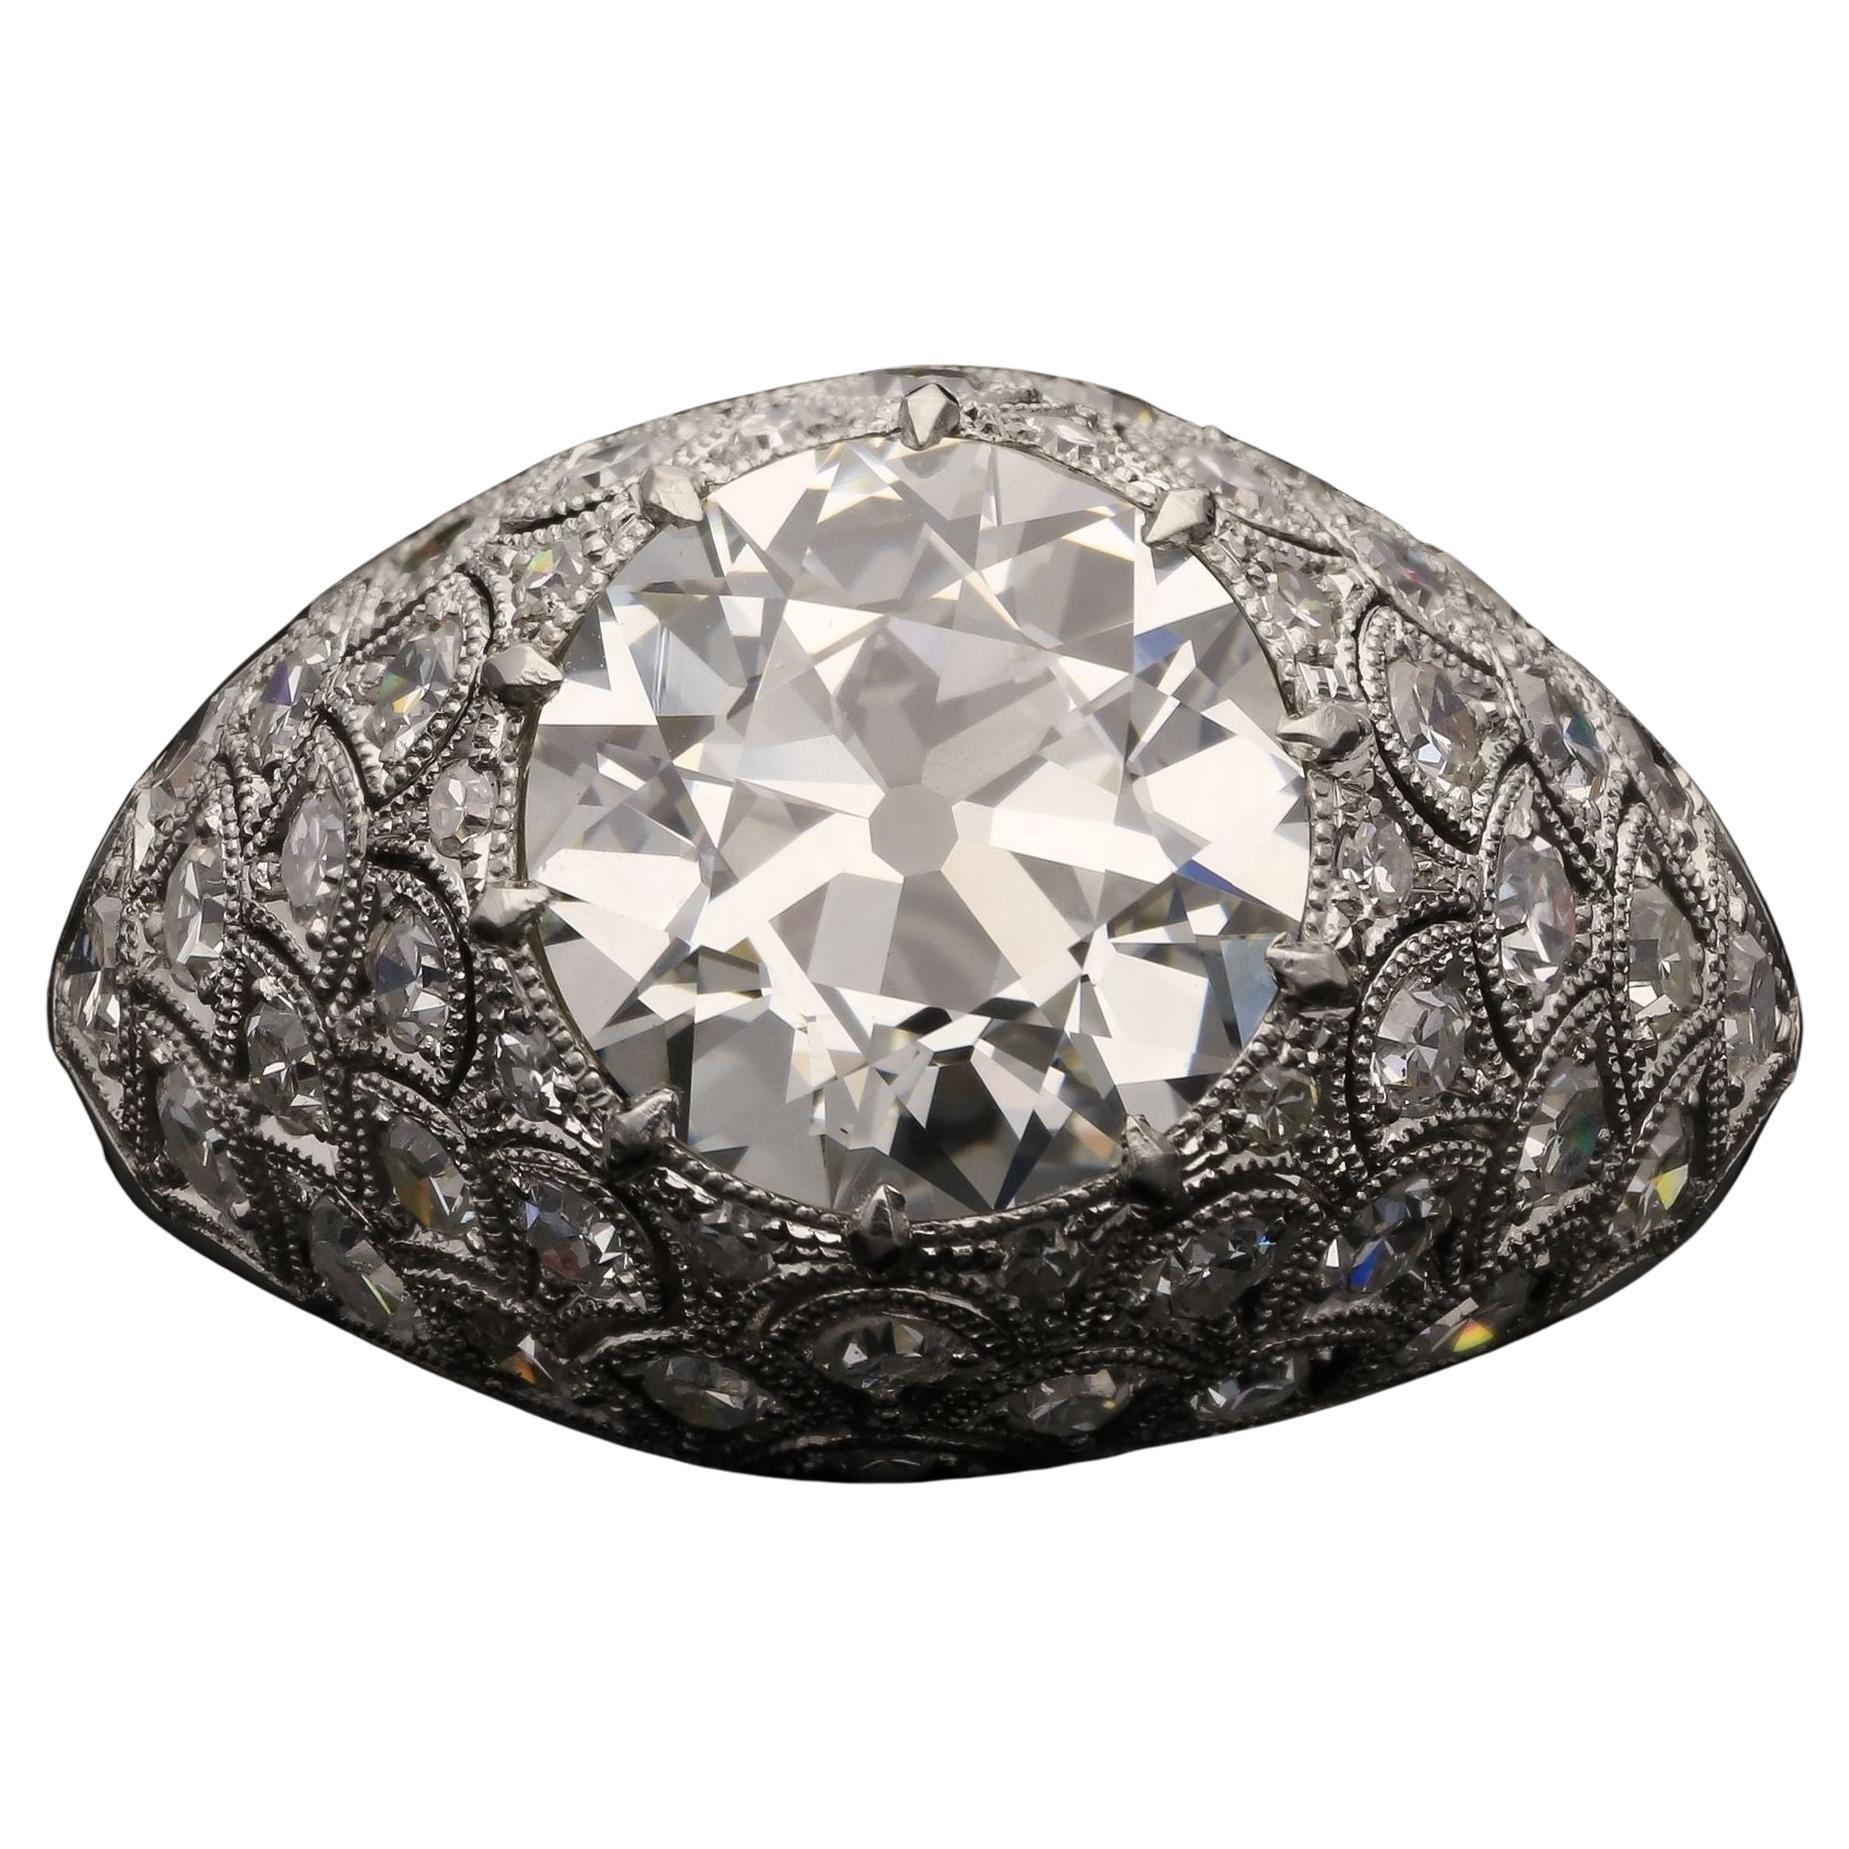 Hancocks 3.12 Carat Old European Brilliant Diamond Ring in Diamond Bombe Mount For Sale